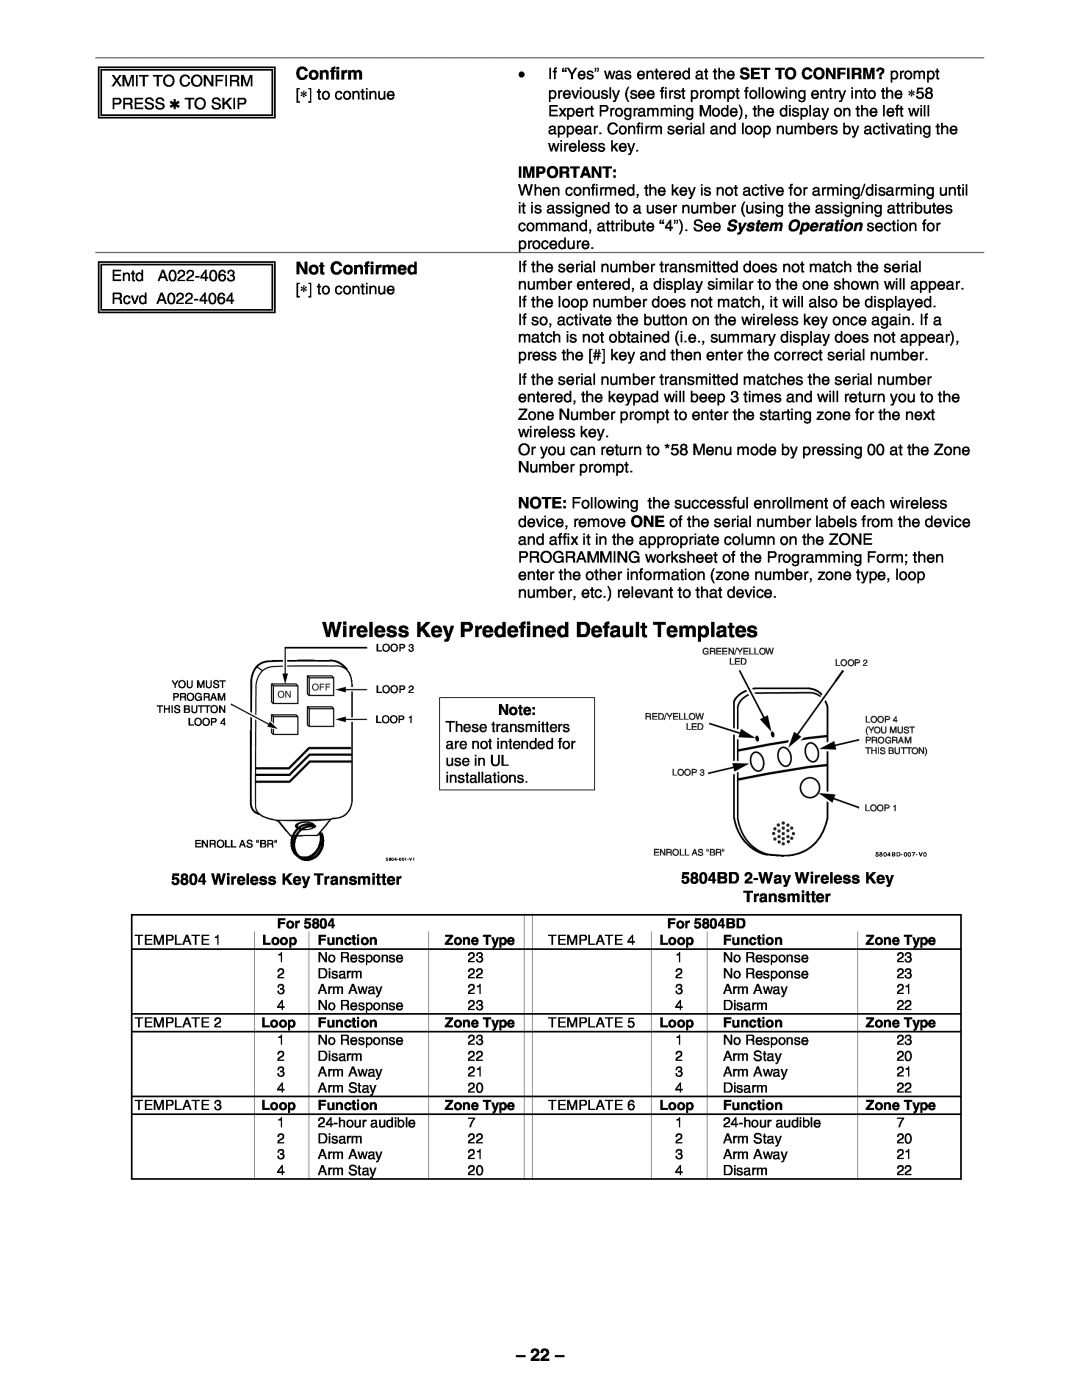 First Alert FA148CPSSIA manual Not Confirmed, 5804BD 2-WayWireless Key Transmitter 